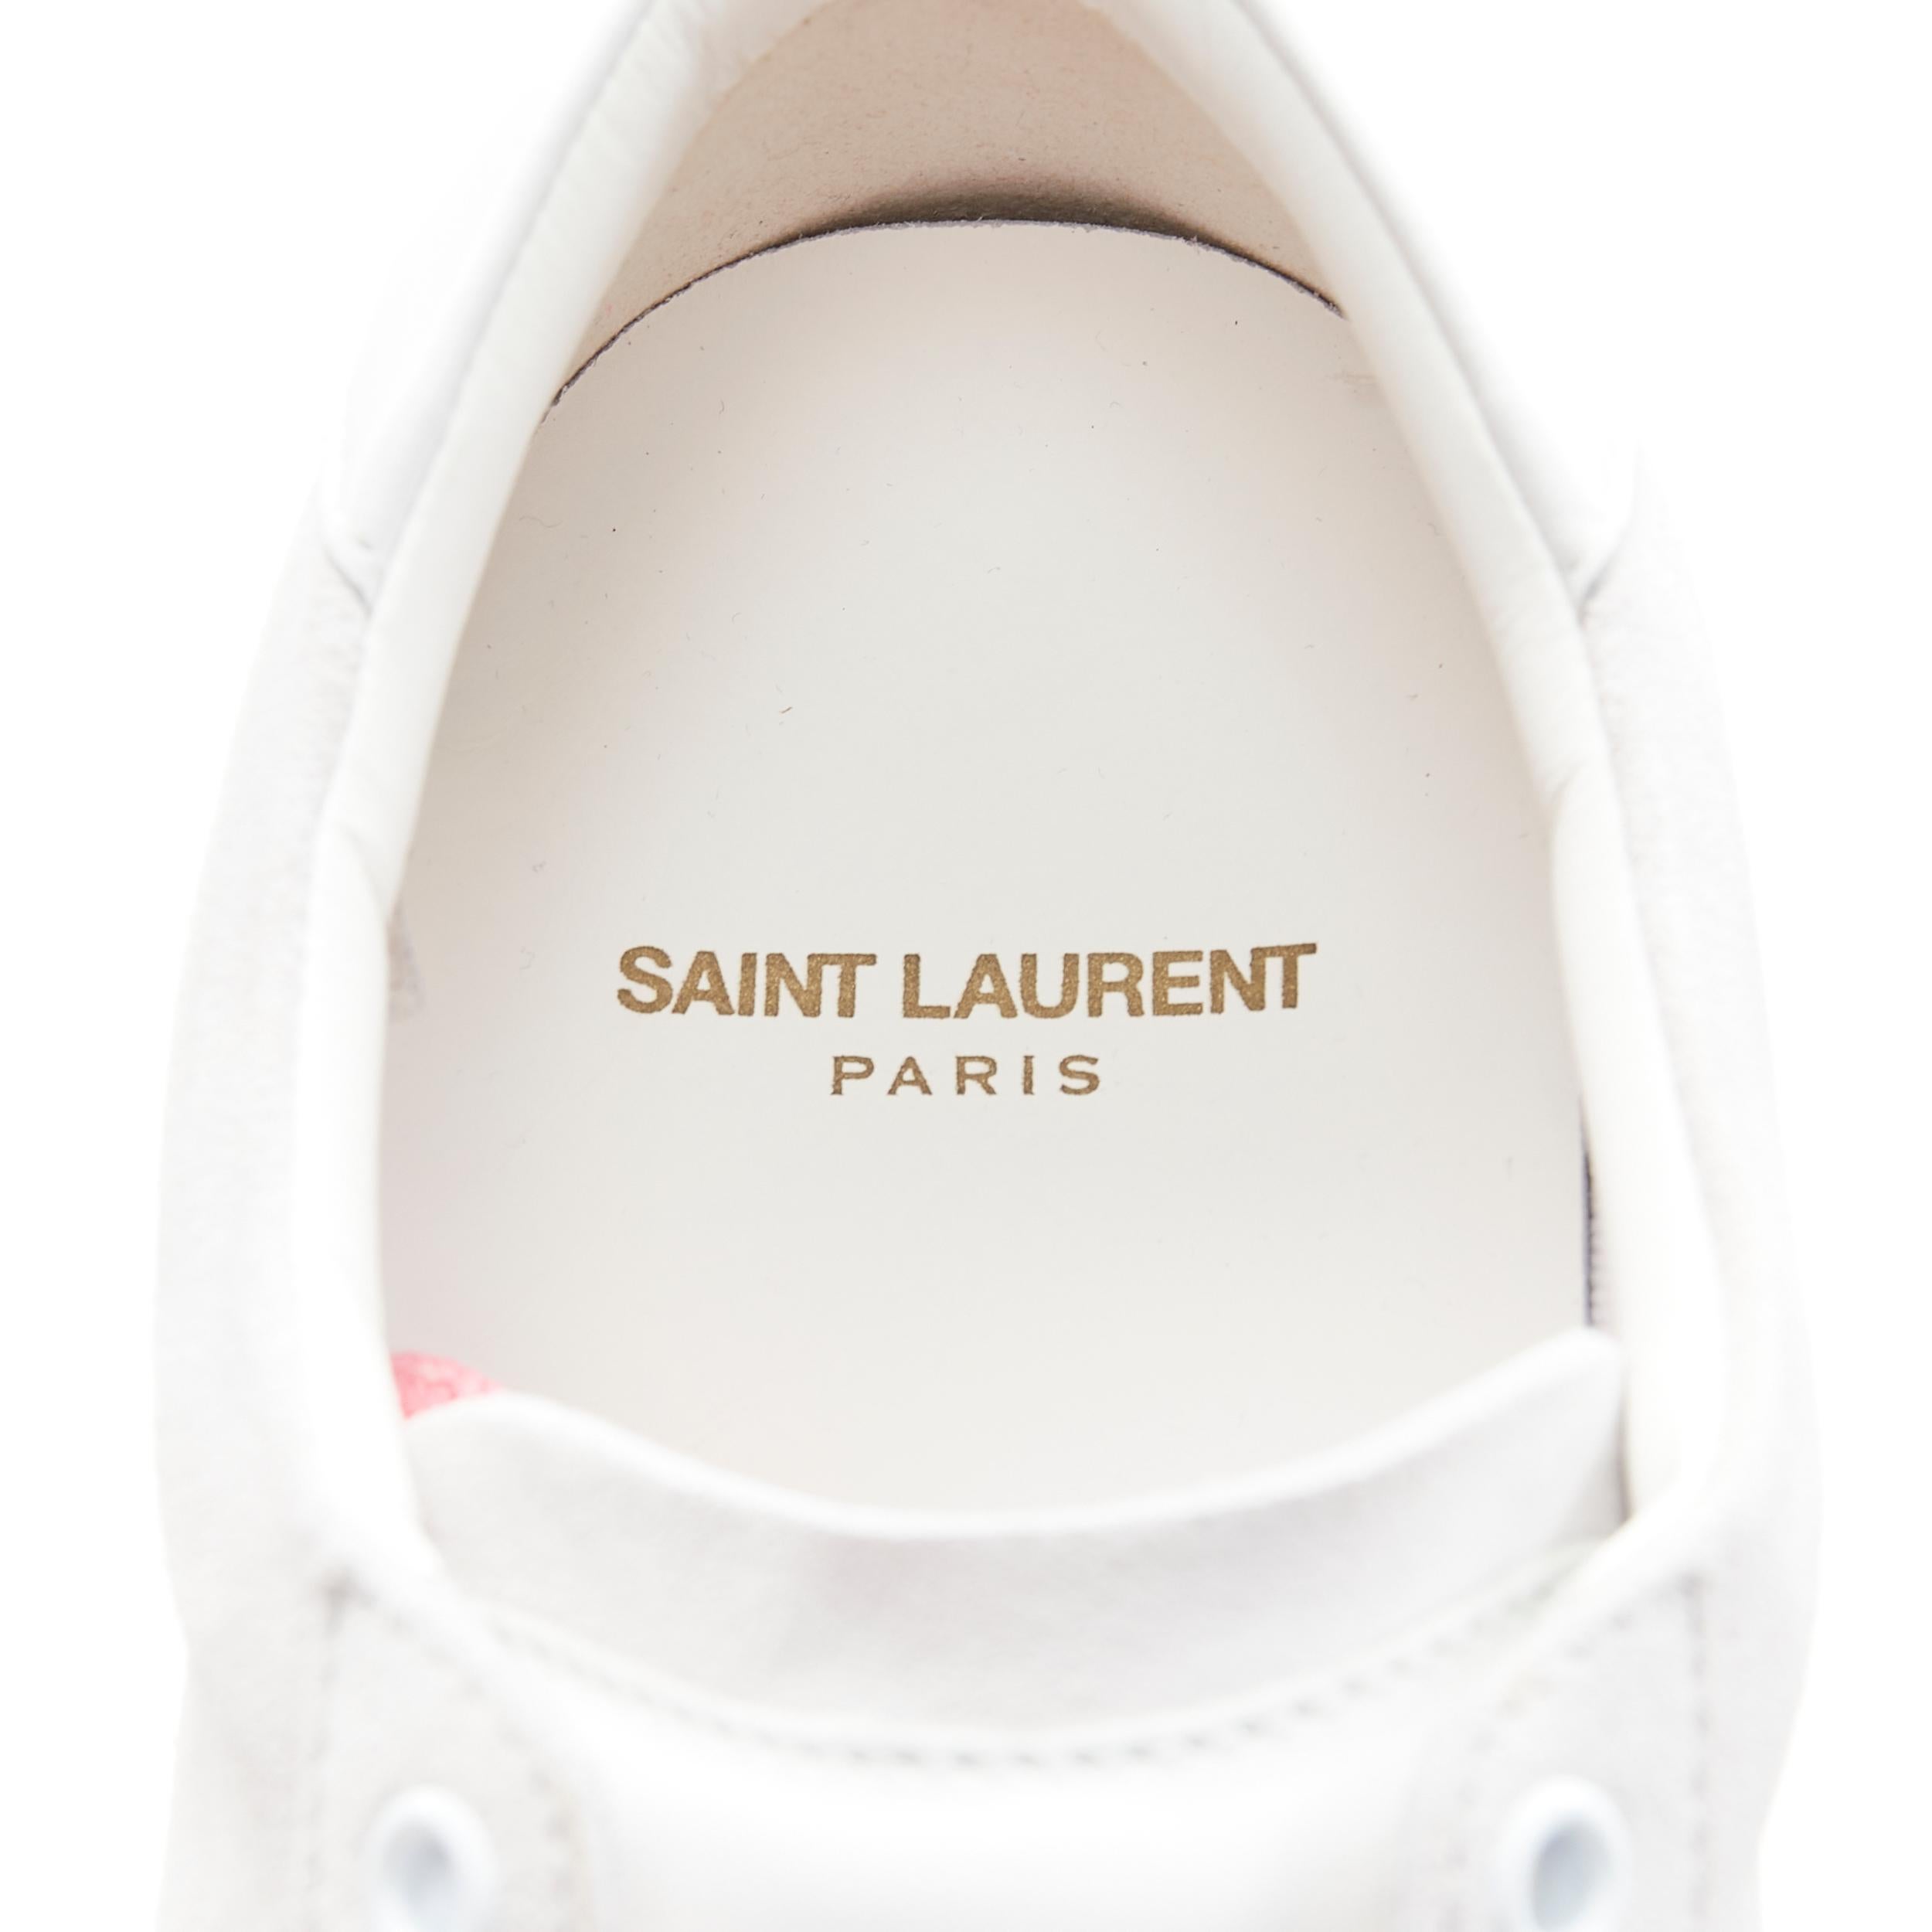 new SAINT LAURENT SL-06 grey suede pink laces logo embroidery low sneaker EU40 6